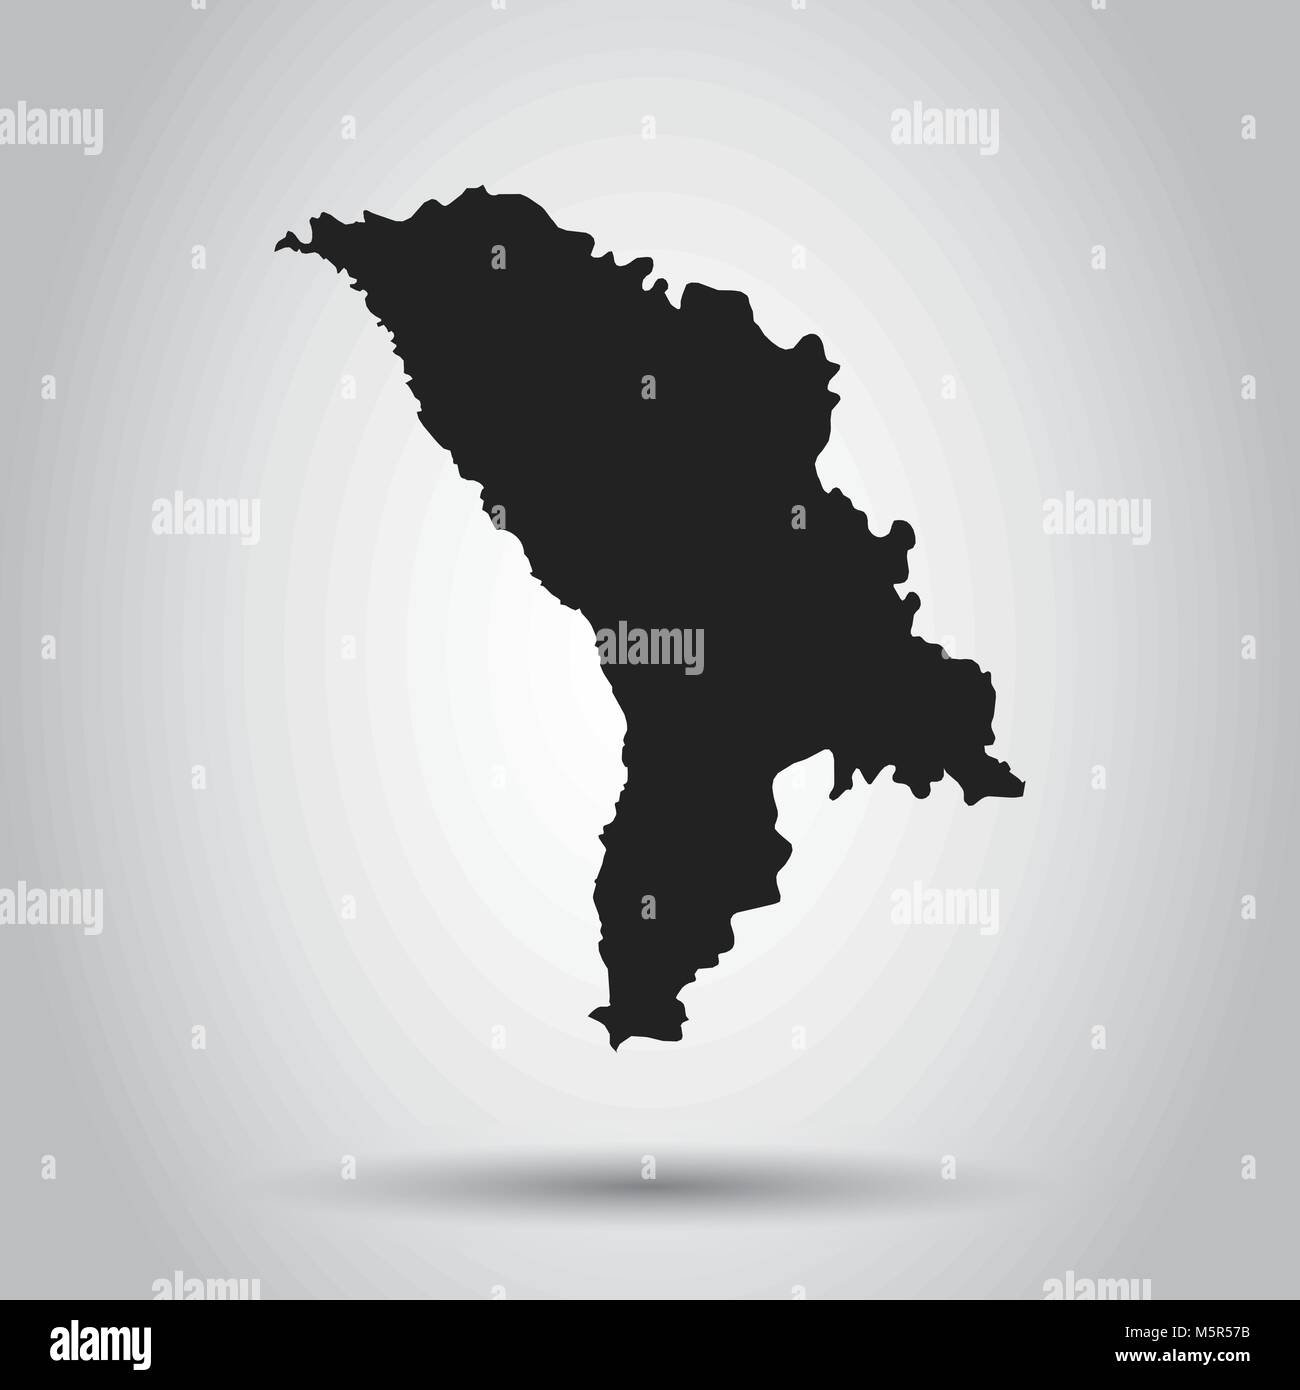 Moldova vector map. Black icon on white background. Stock Vector